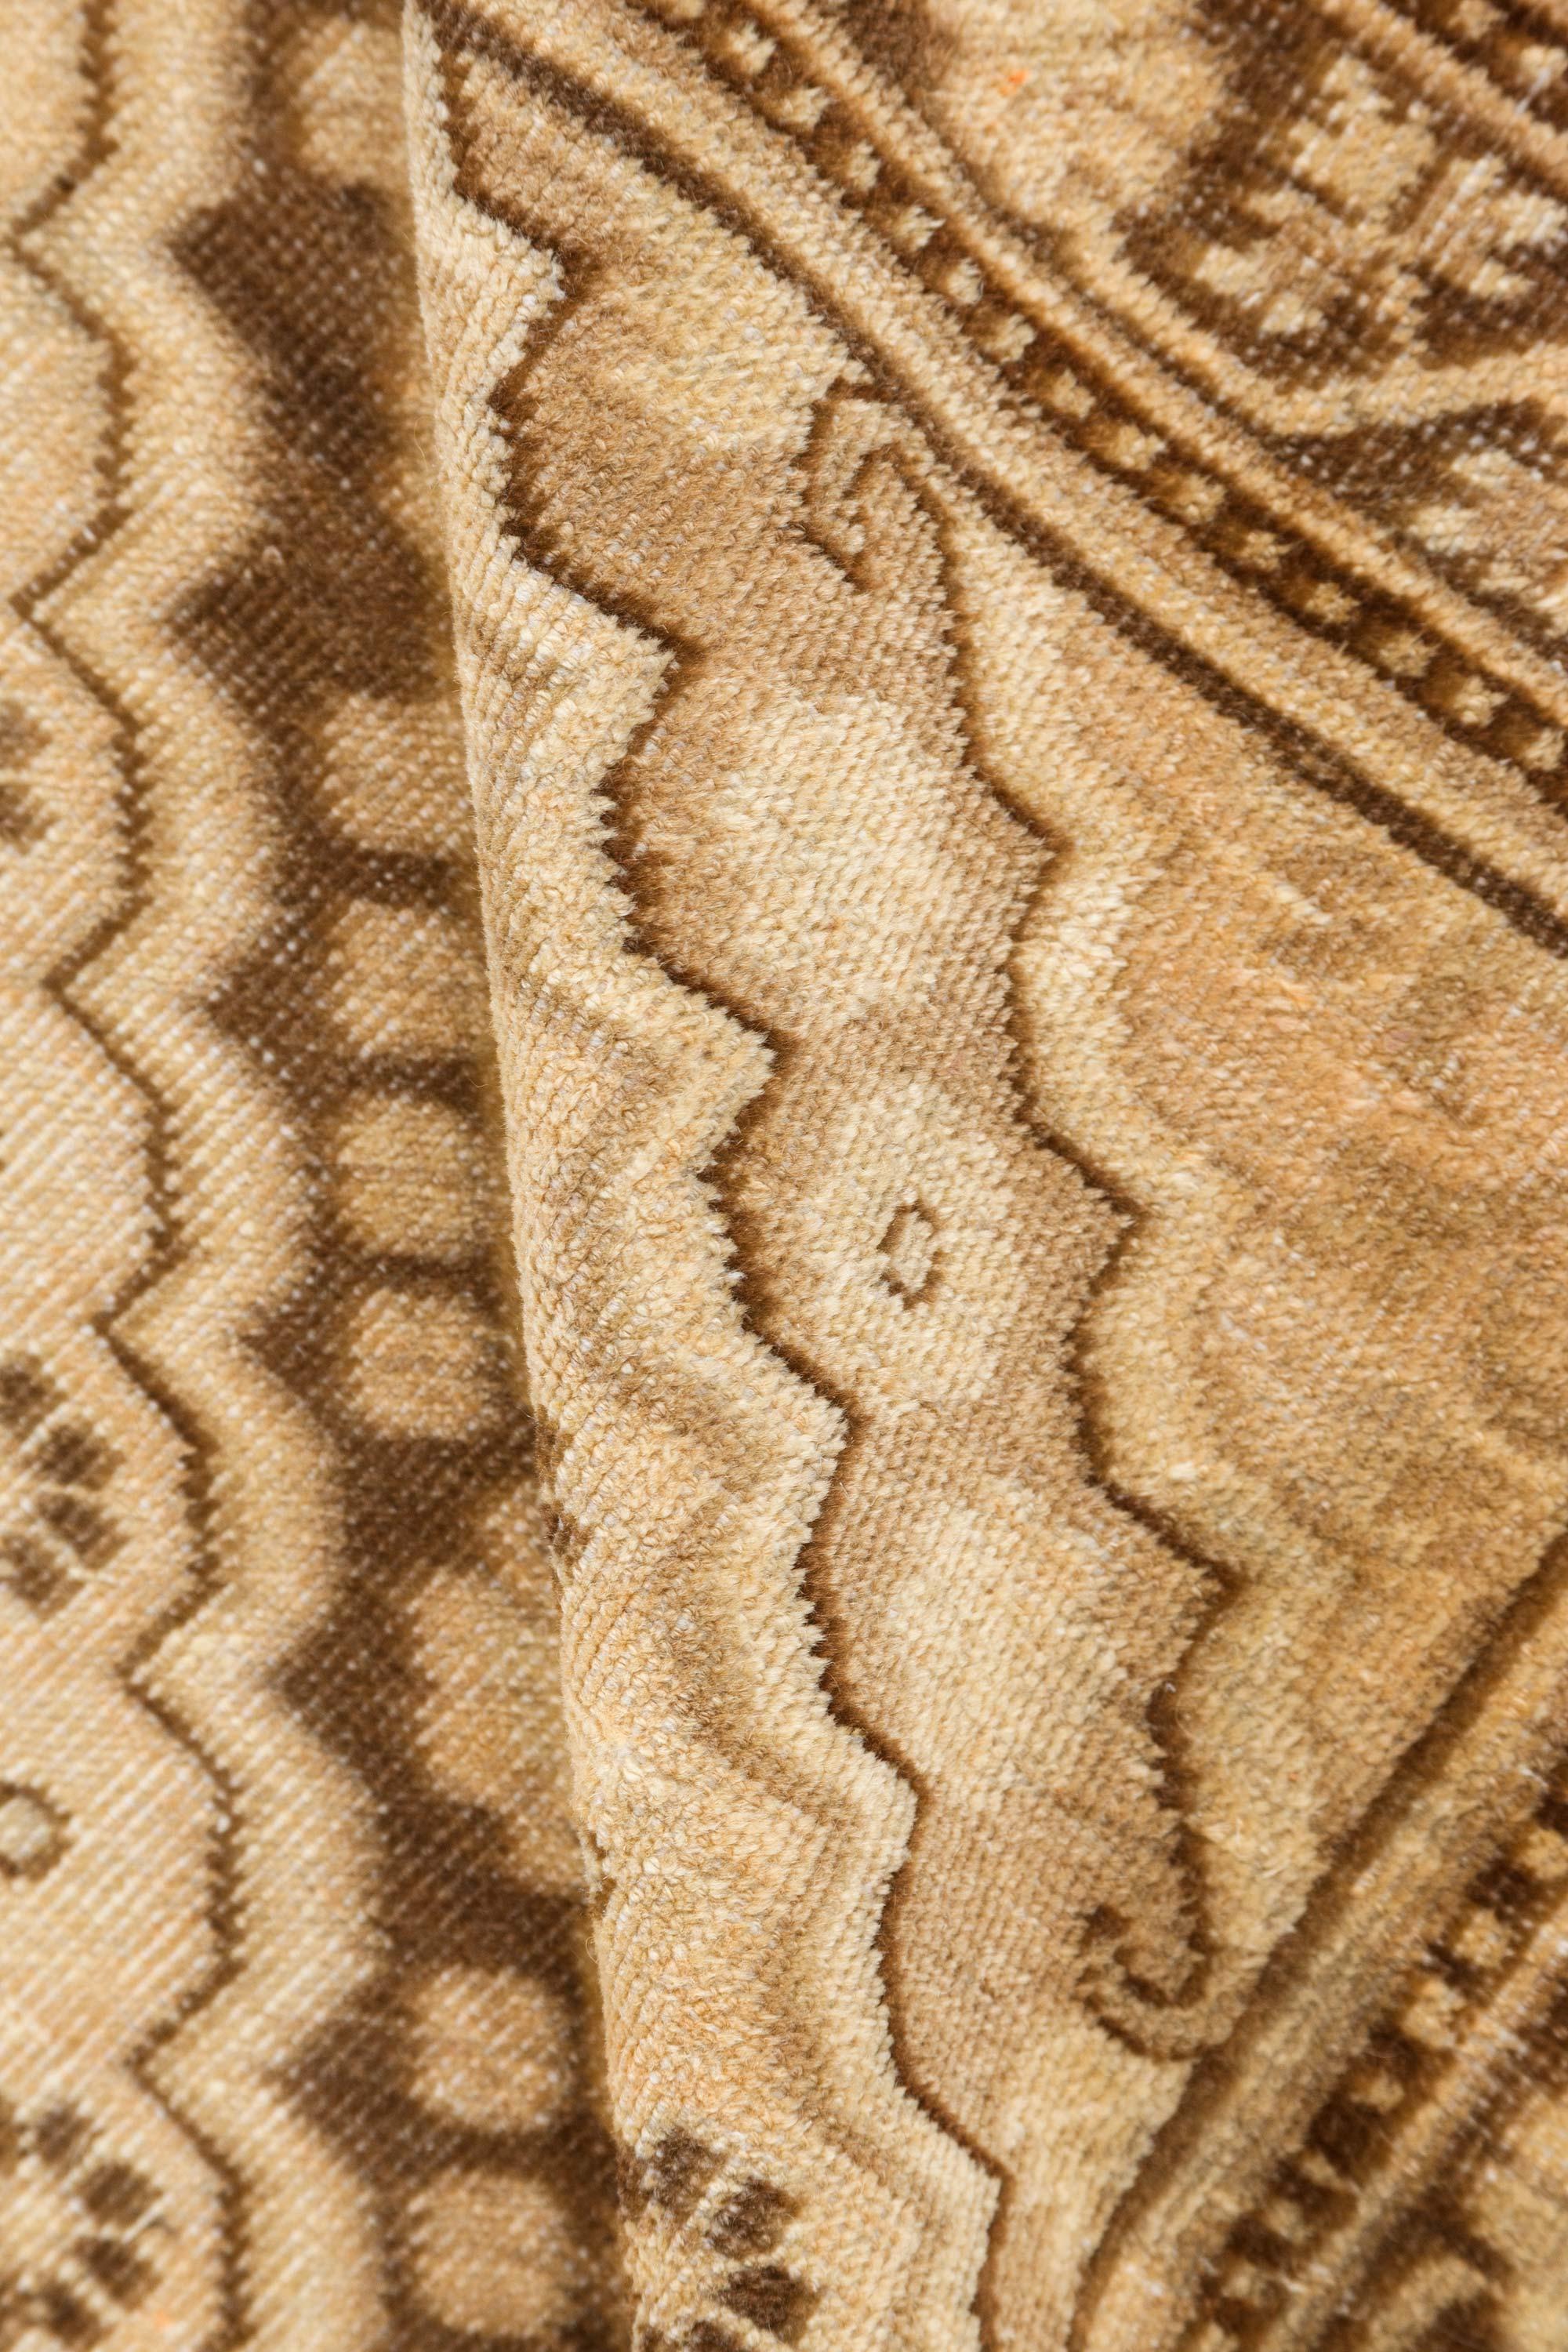 High-quality Samarkand Khotan beige, brown hand knotted wool rug
Size: 11'8